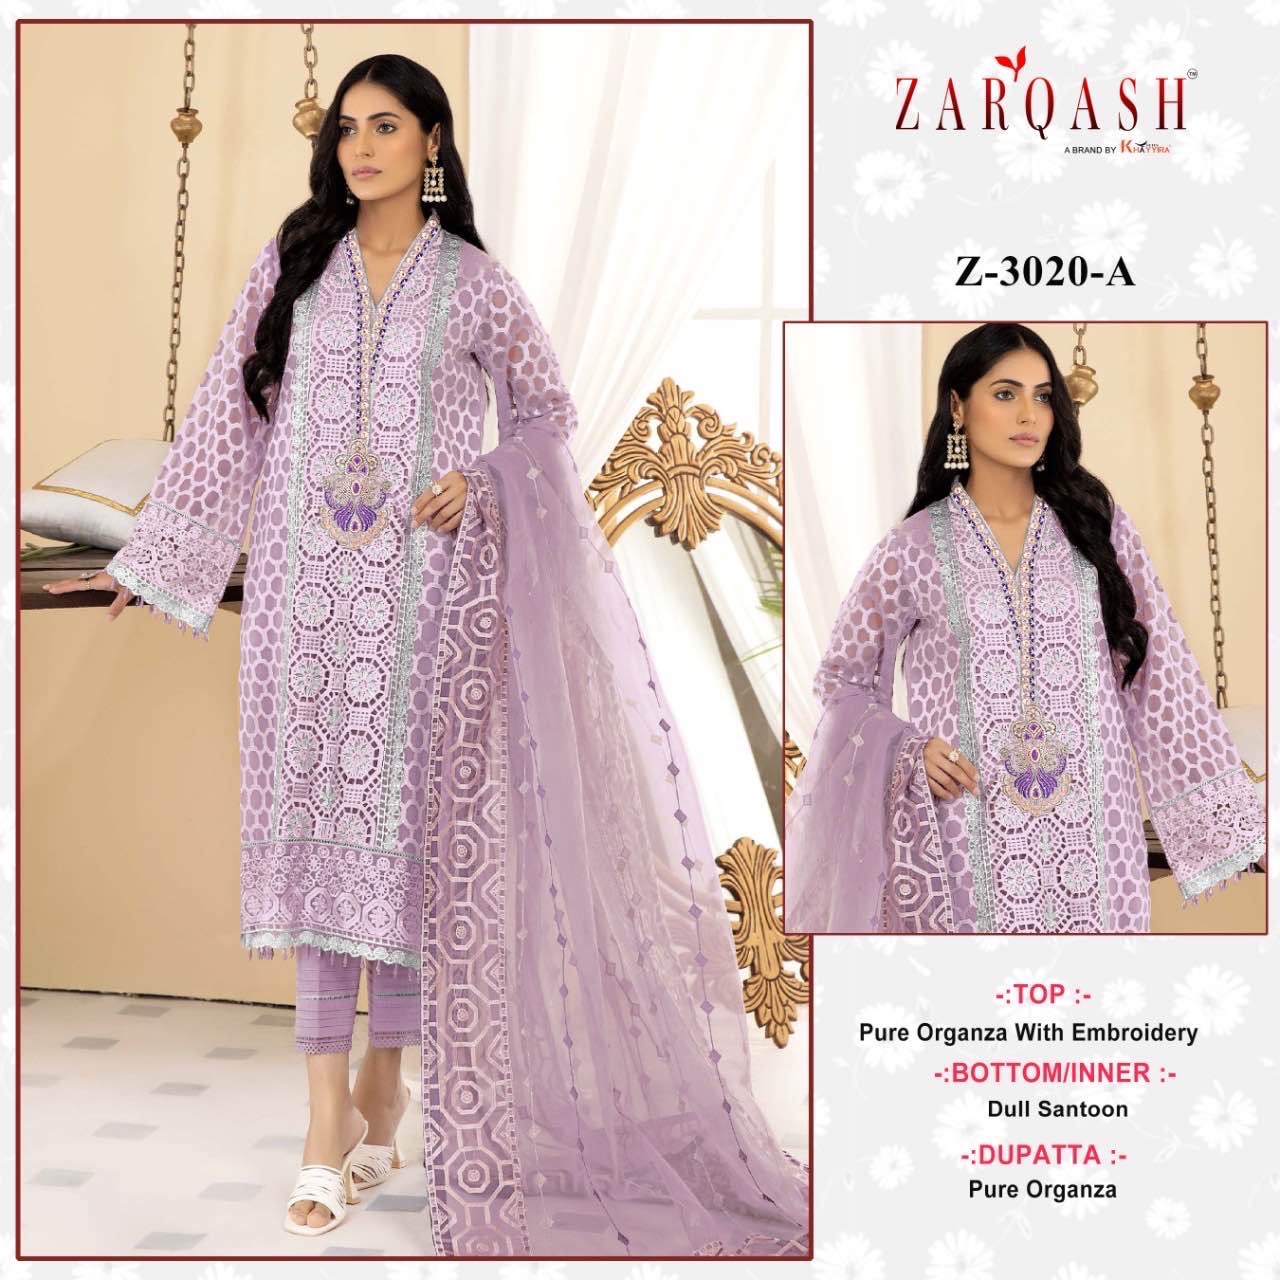 Zarqash Suits Z-3020-A